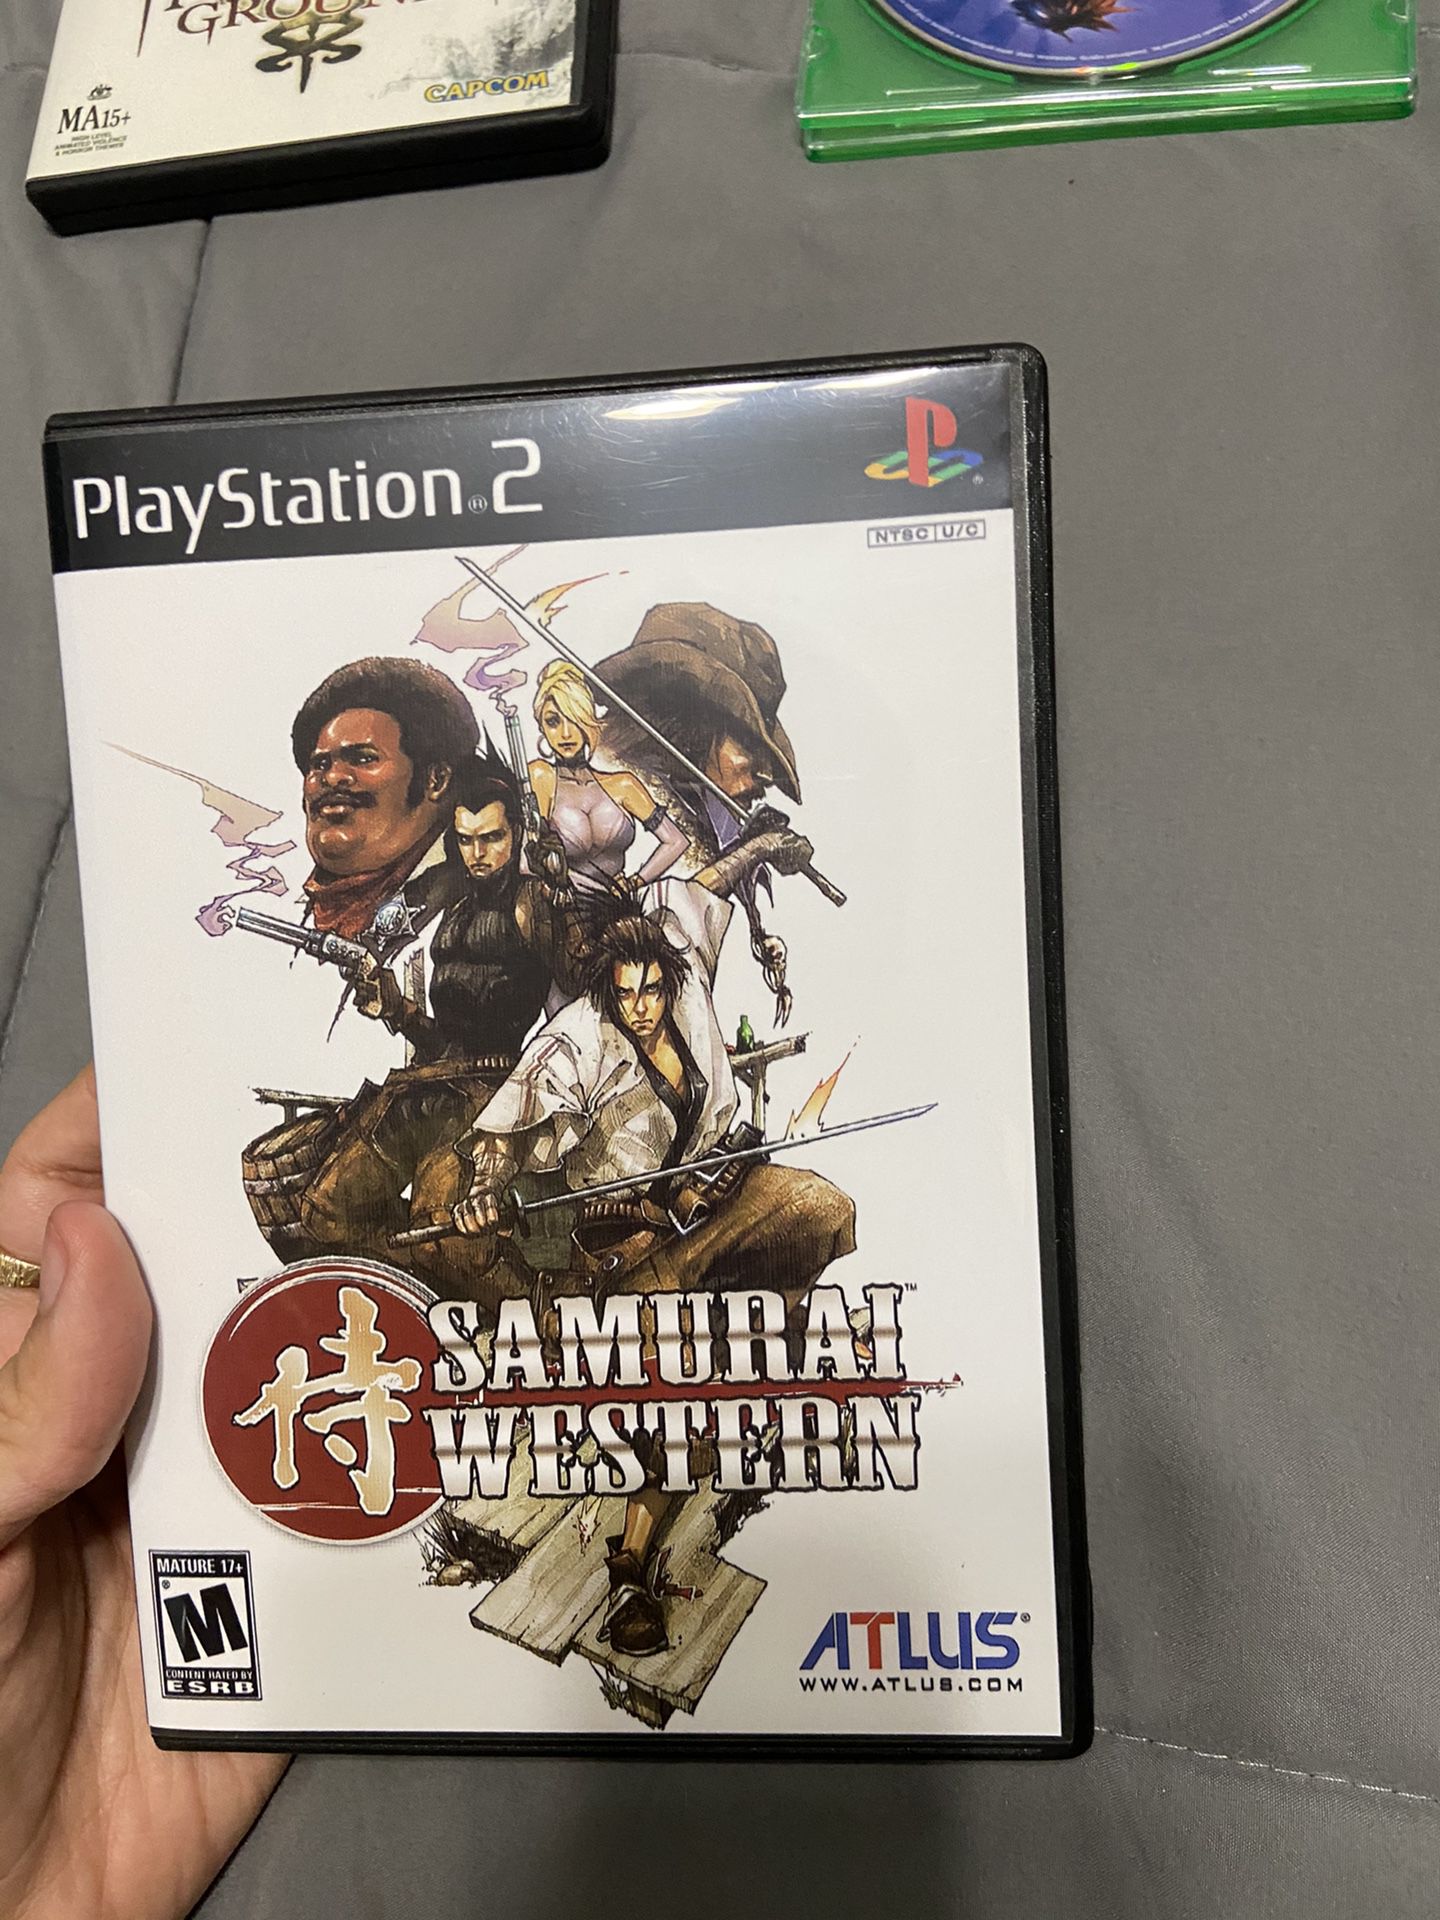 Samurai western ps2 tested